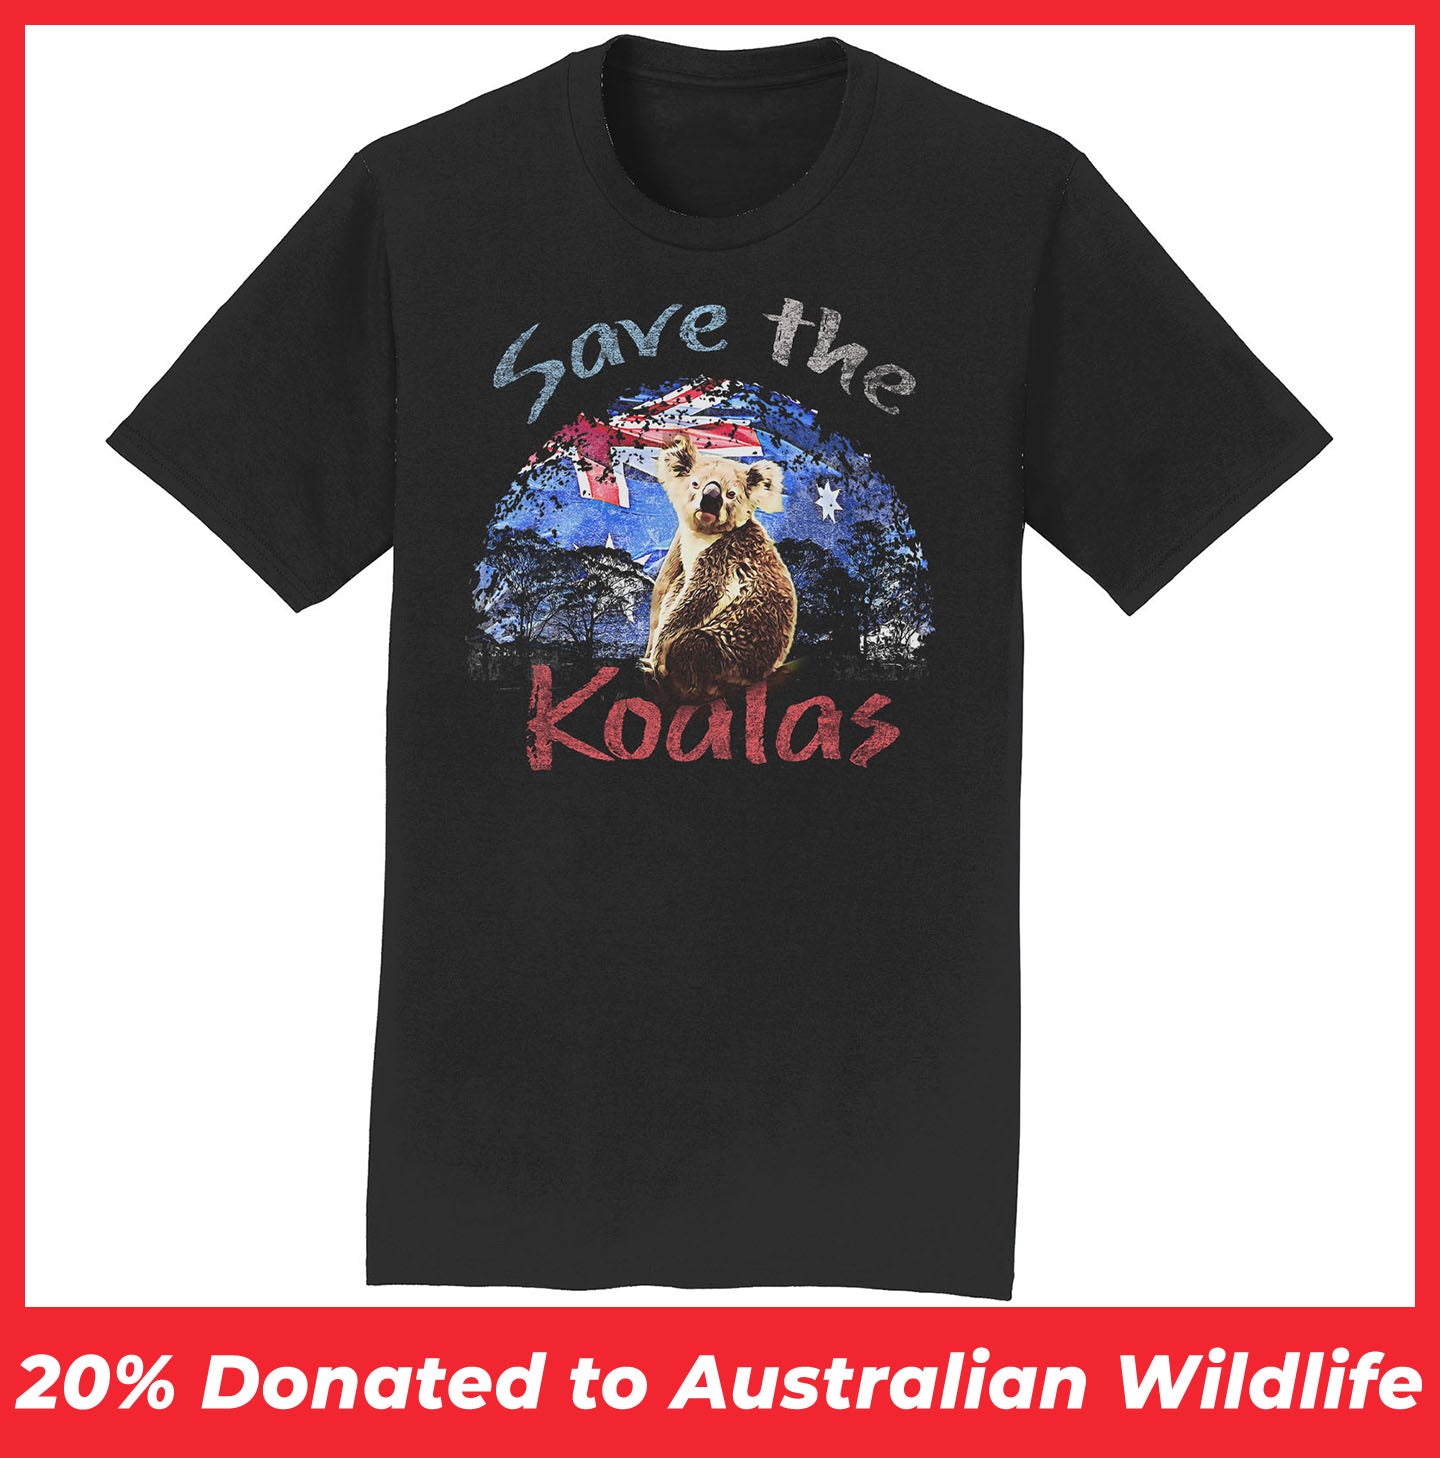 Help Australia Fires Animal Apparel Collection